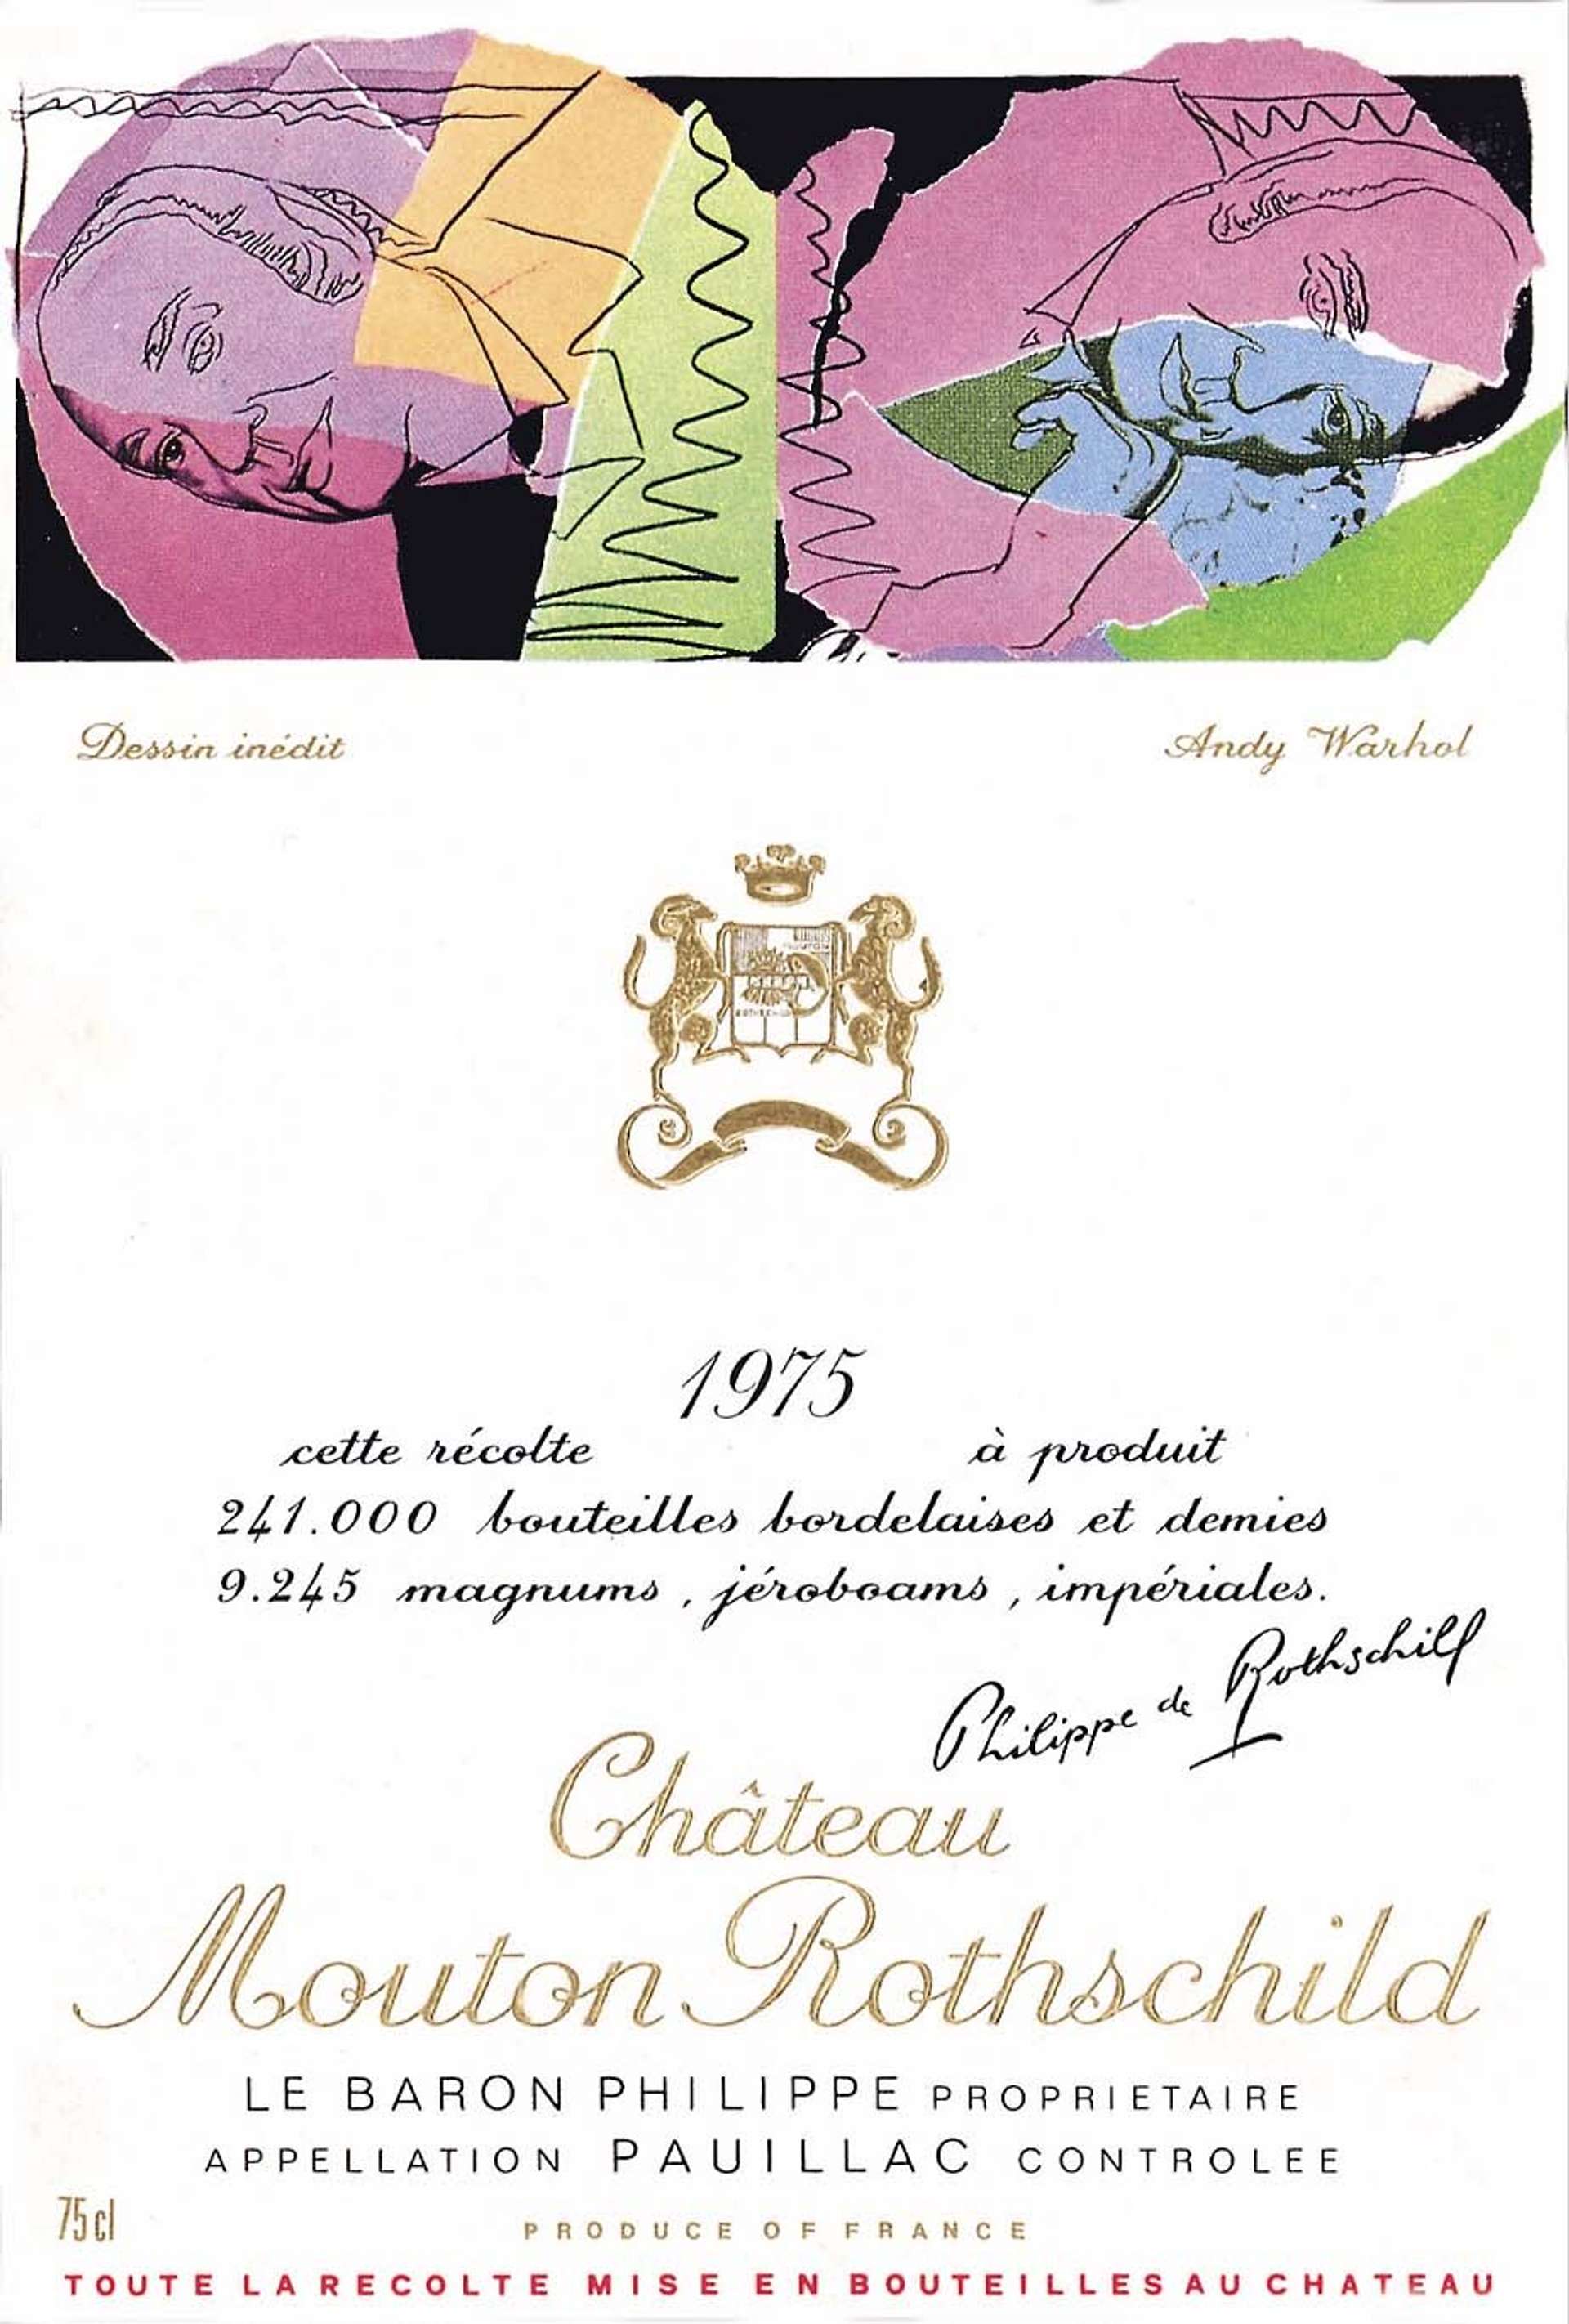 Mouton Rothschild 1975 by Andy Warhol - MyArtBroker